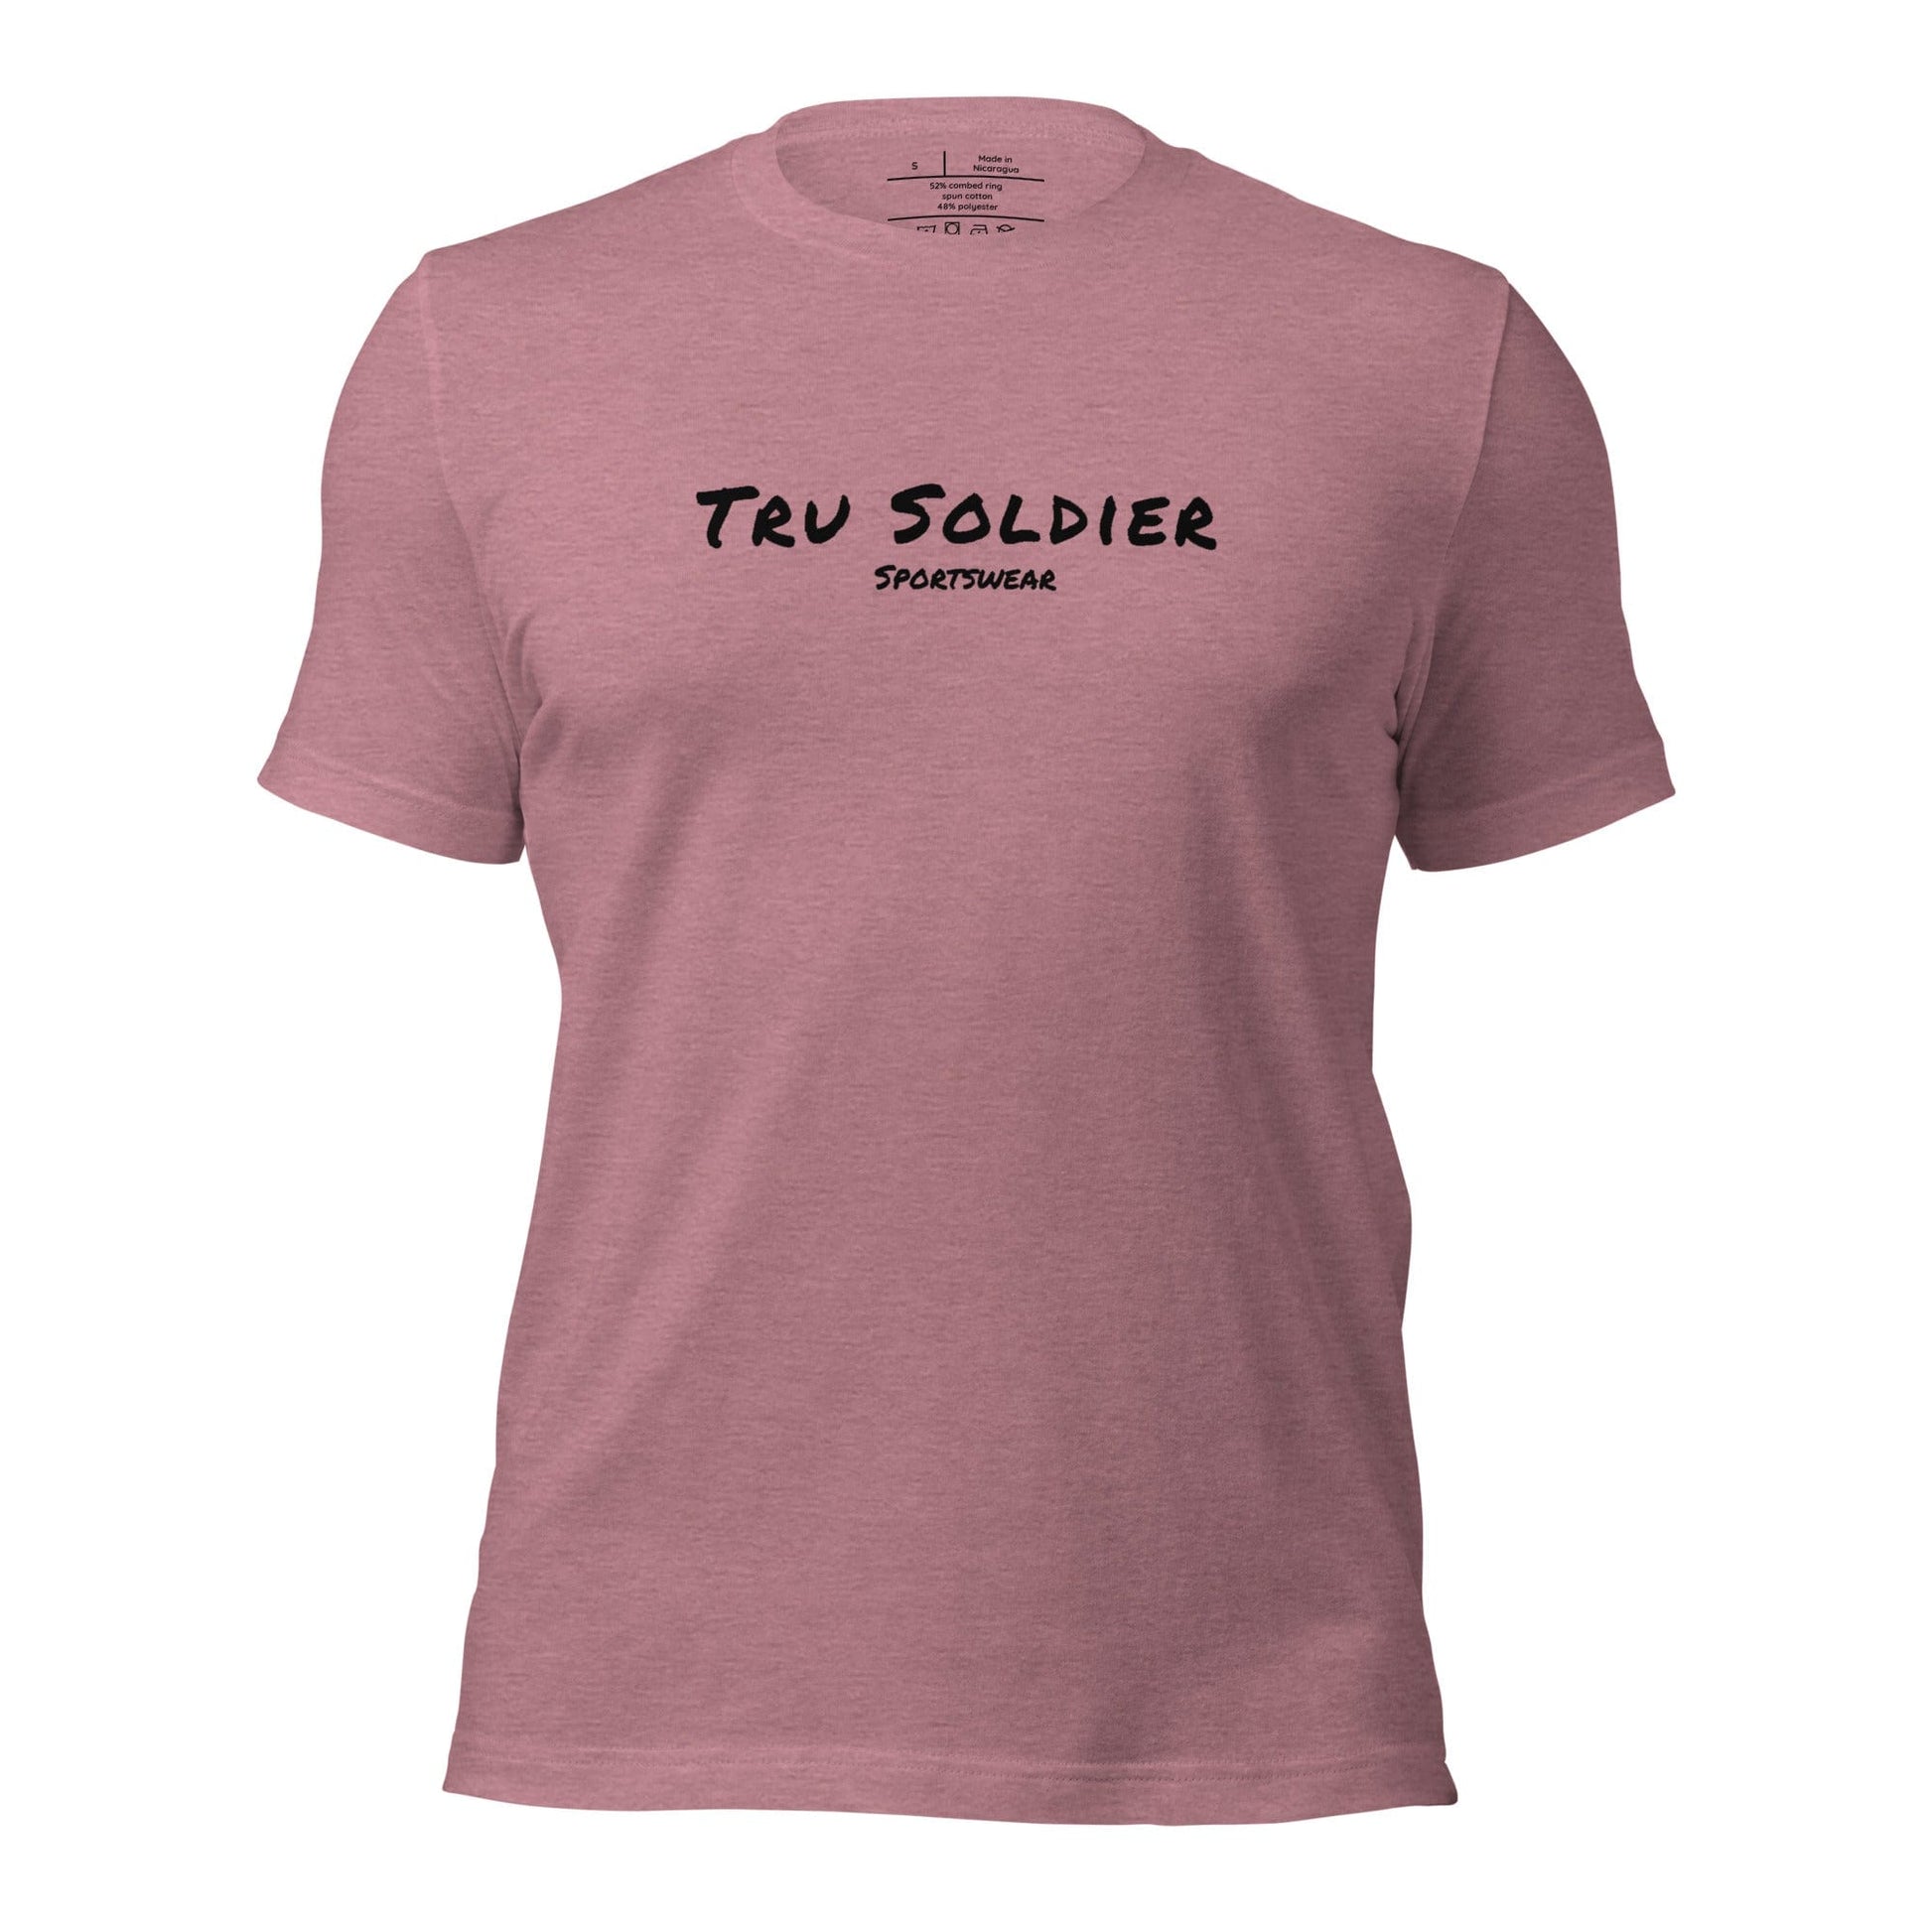 Tru Soldier Sportswear  Heather Orchid / S Unisex t-shirt